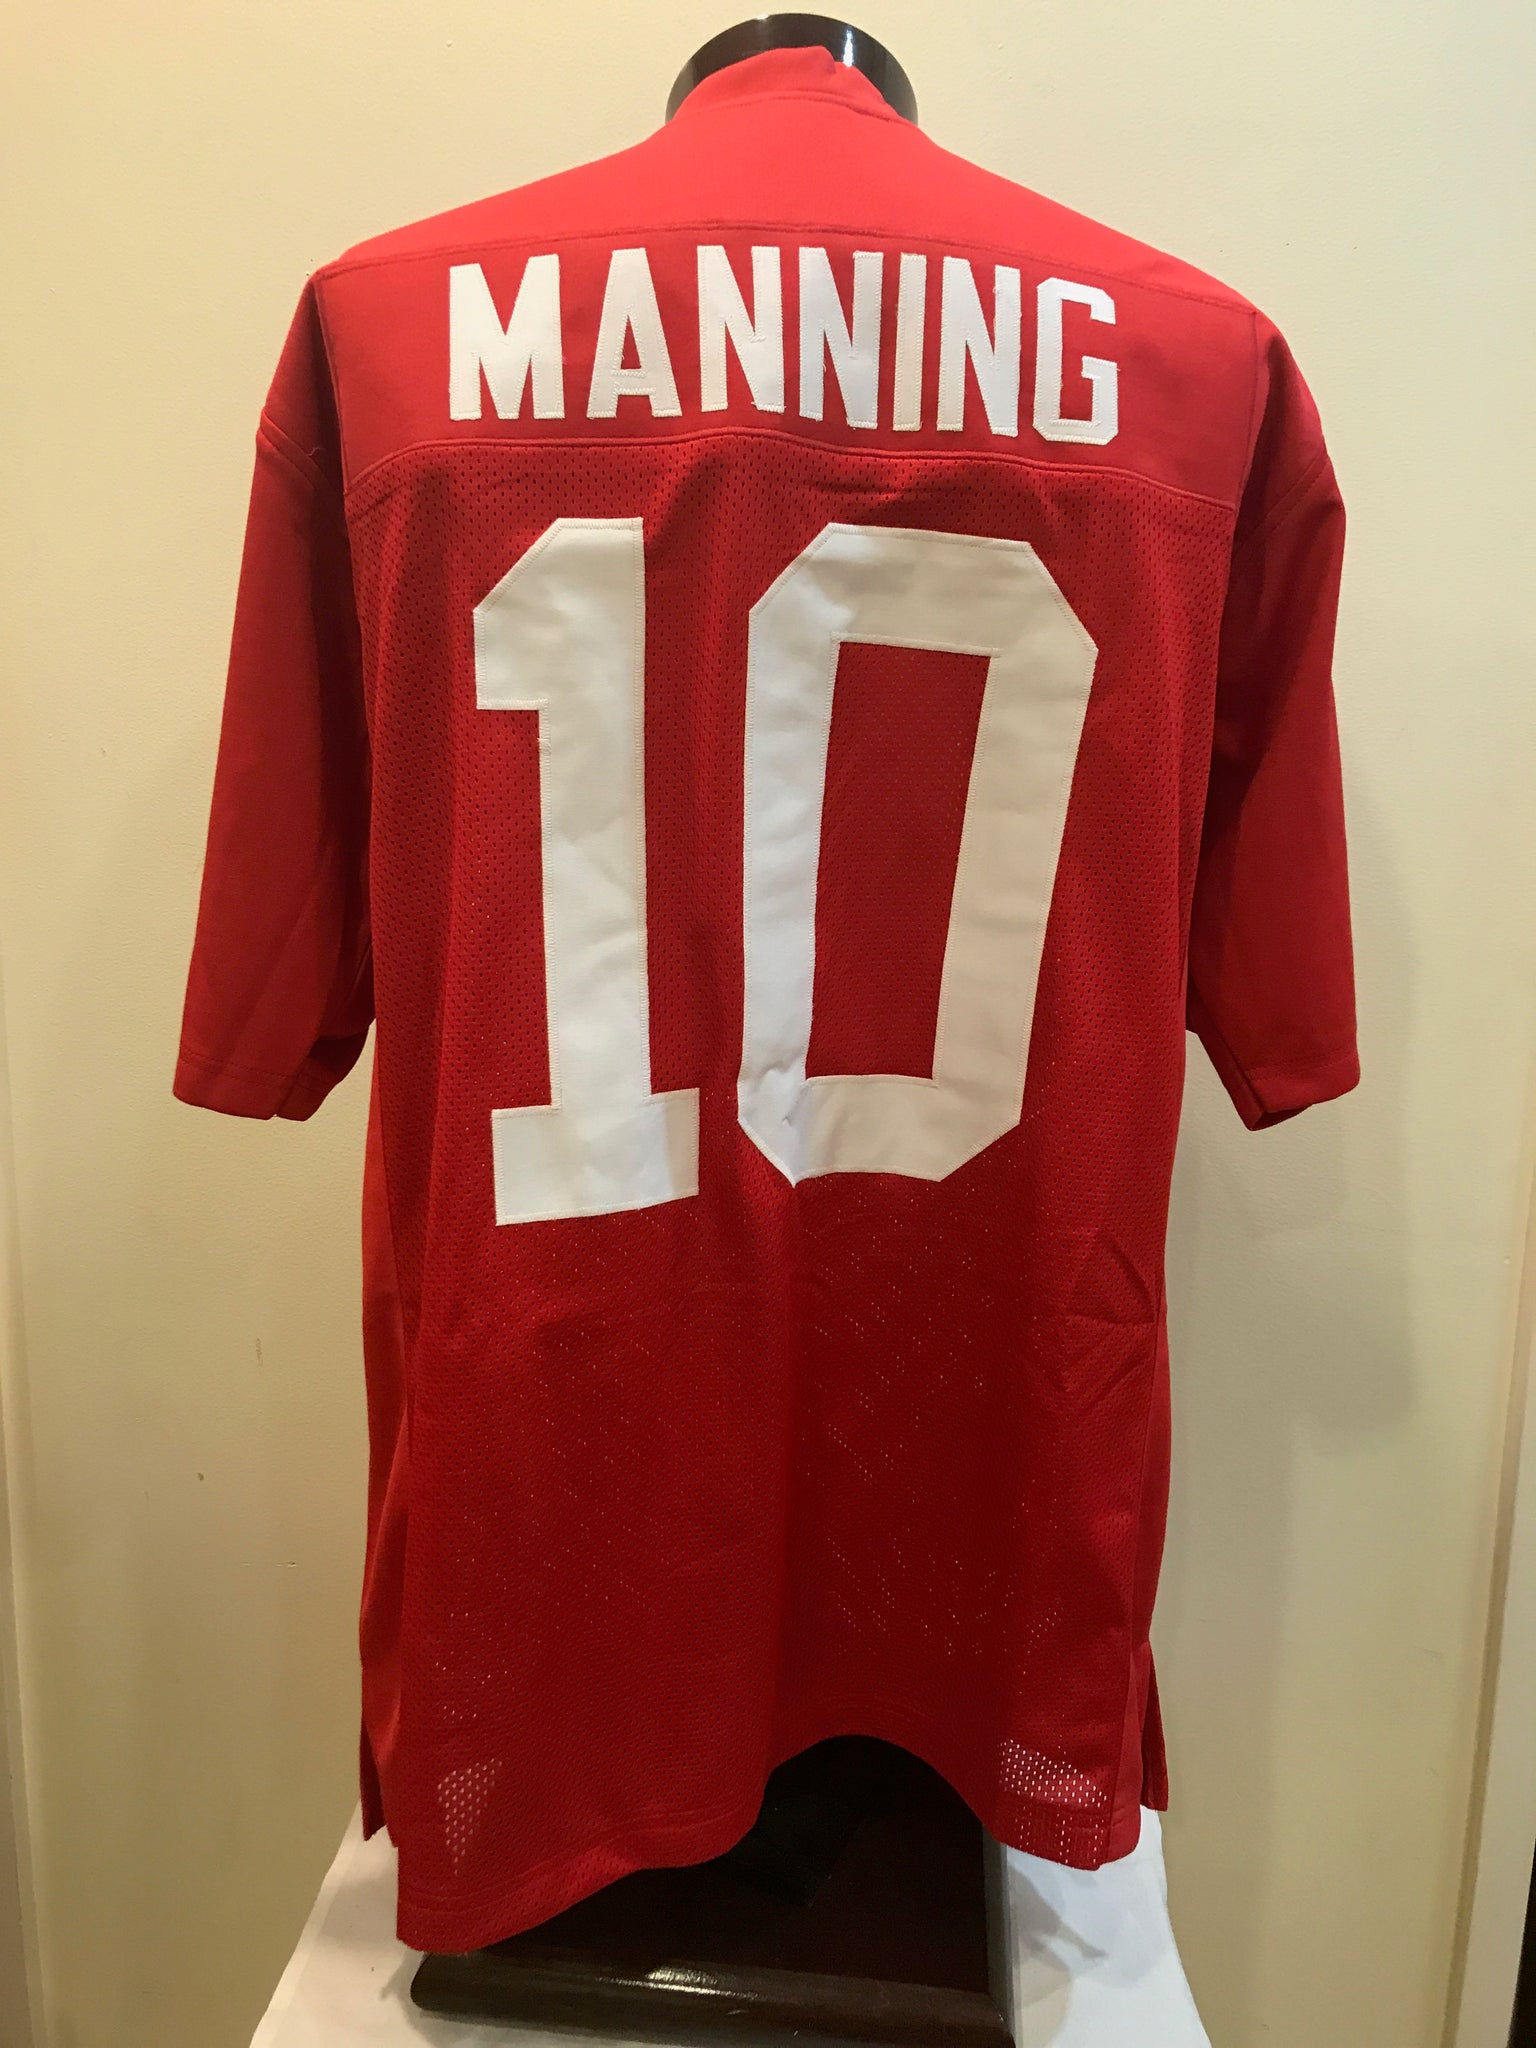 Eli Manning Jerseys, Eli Manning Shirt, Eli Manning Gear & Merchandise